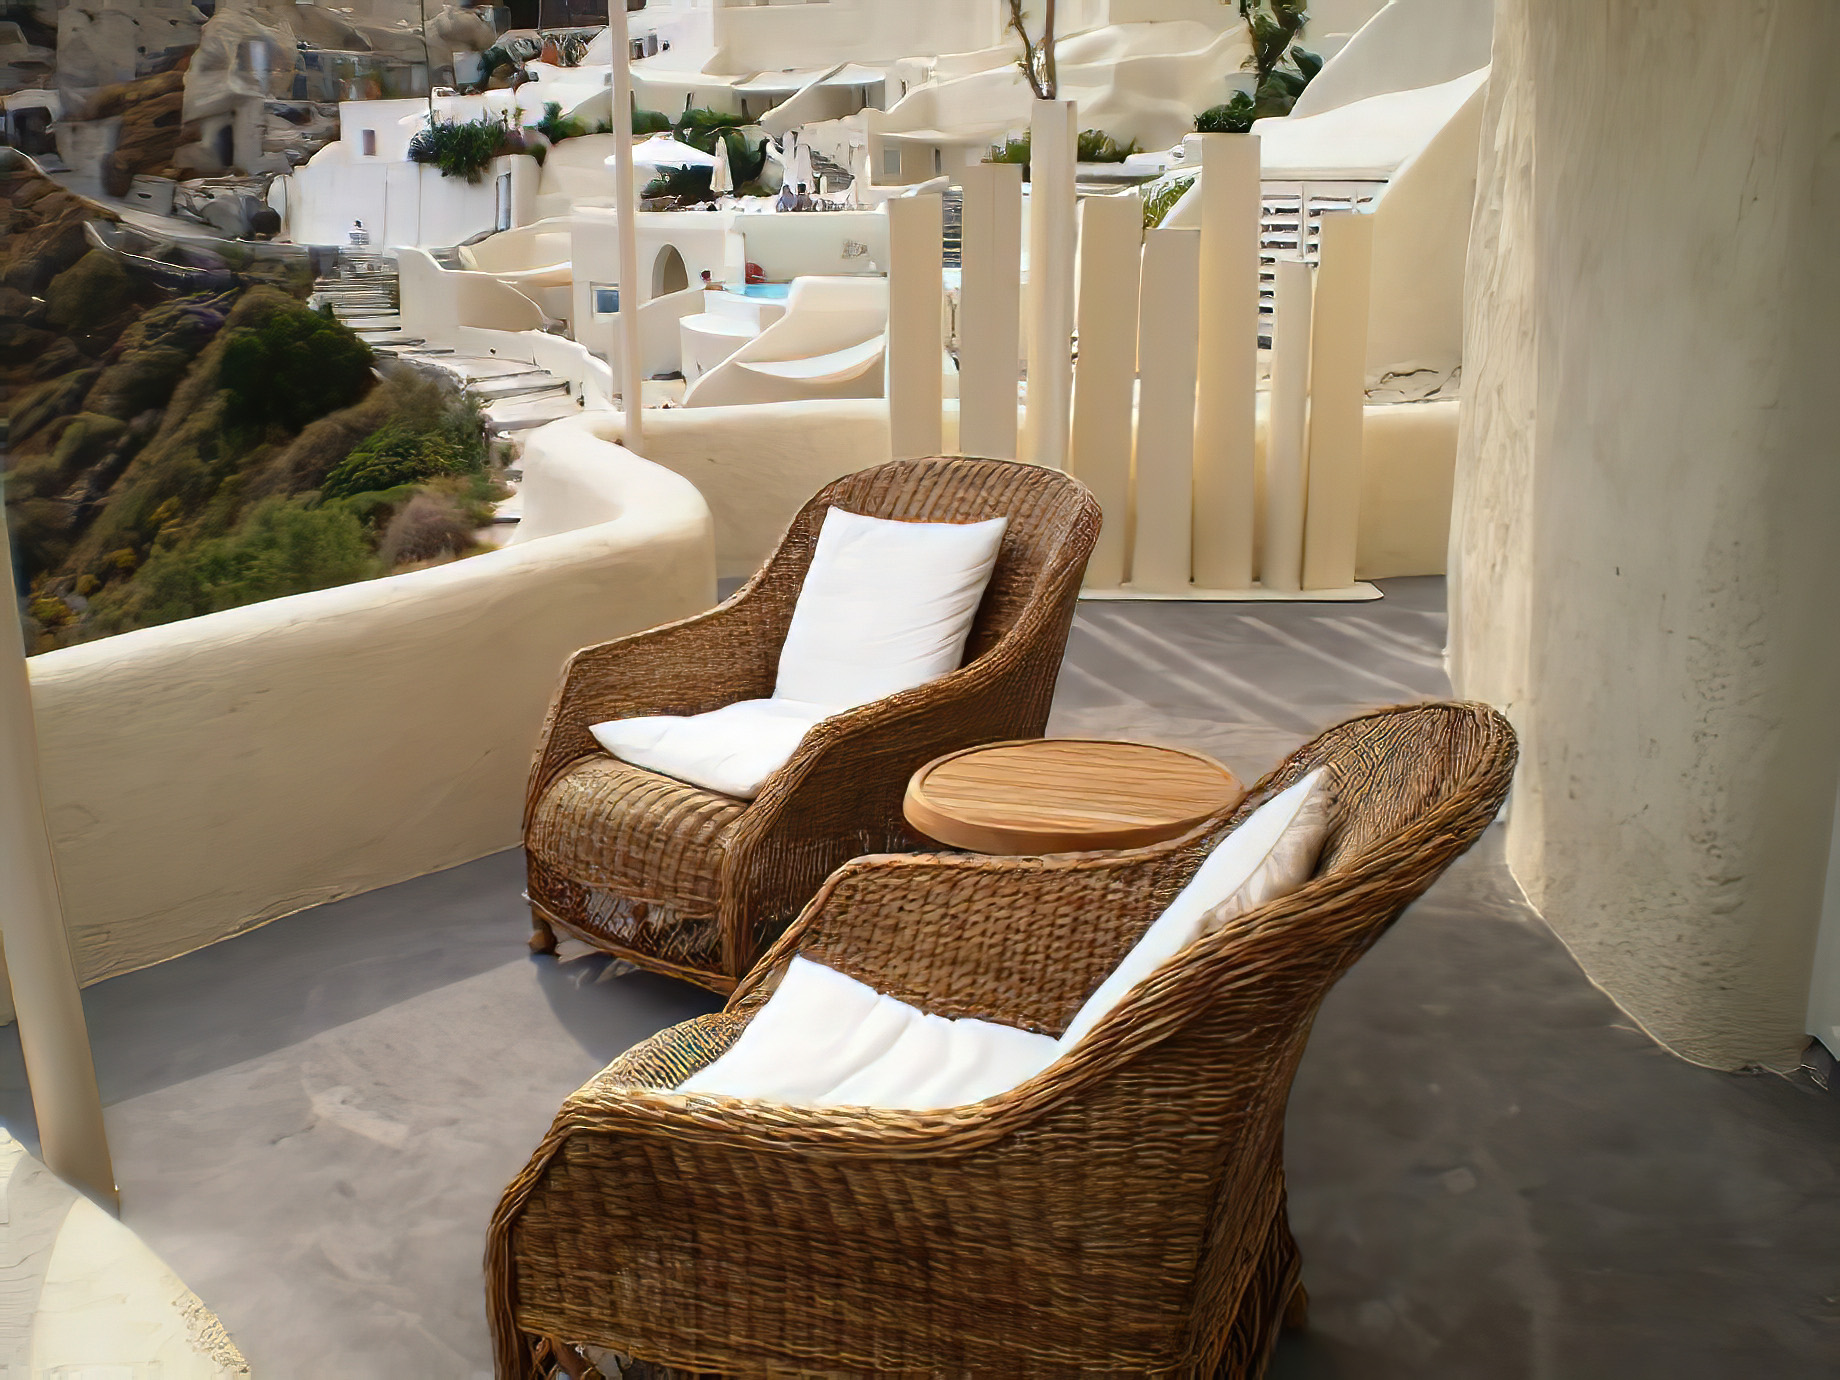 Mystique Hotel Santorini – Oia, Santorini Island, Greece – Ocean View Deck Chairs